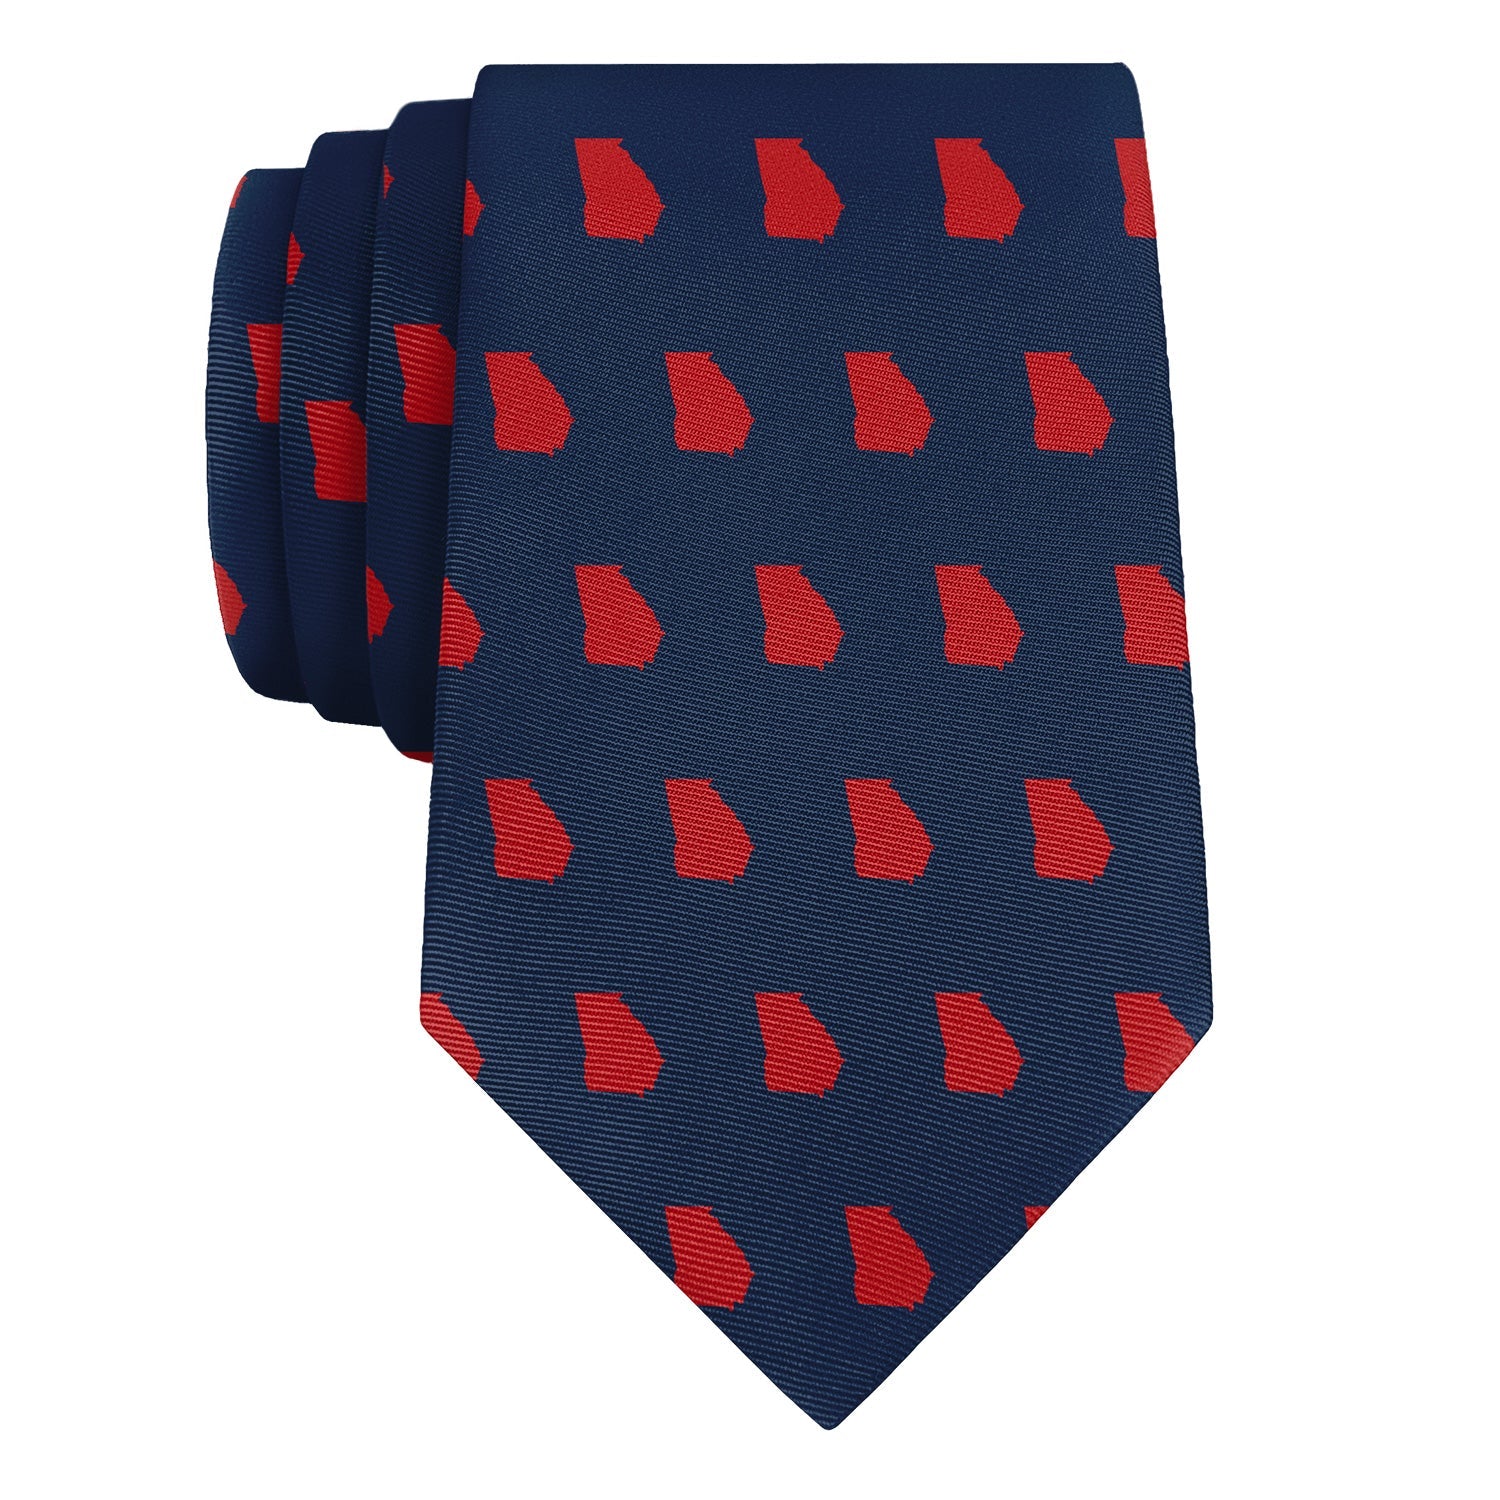 Georgia State Outline Necktie - Knotty 2.75" -  - Knotty Tie Co.